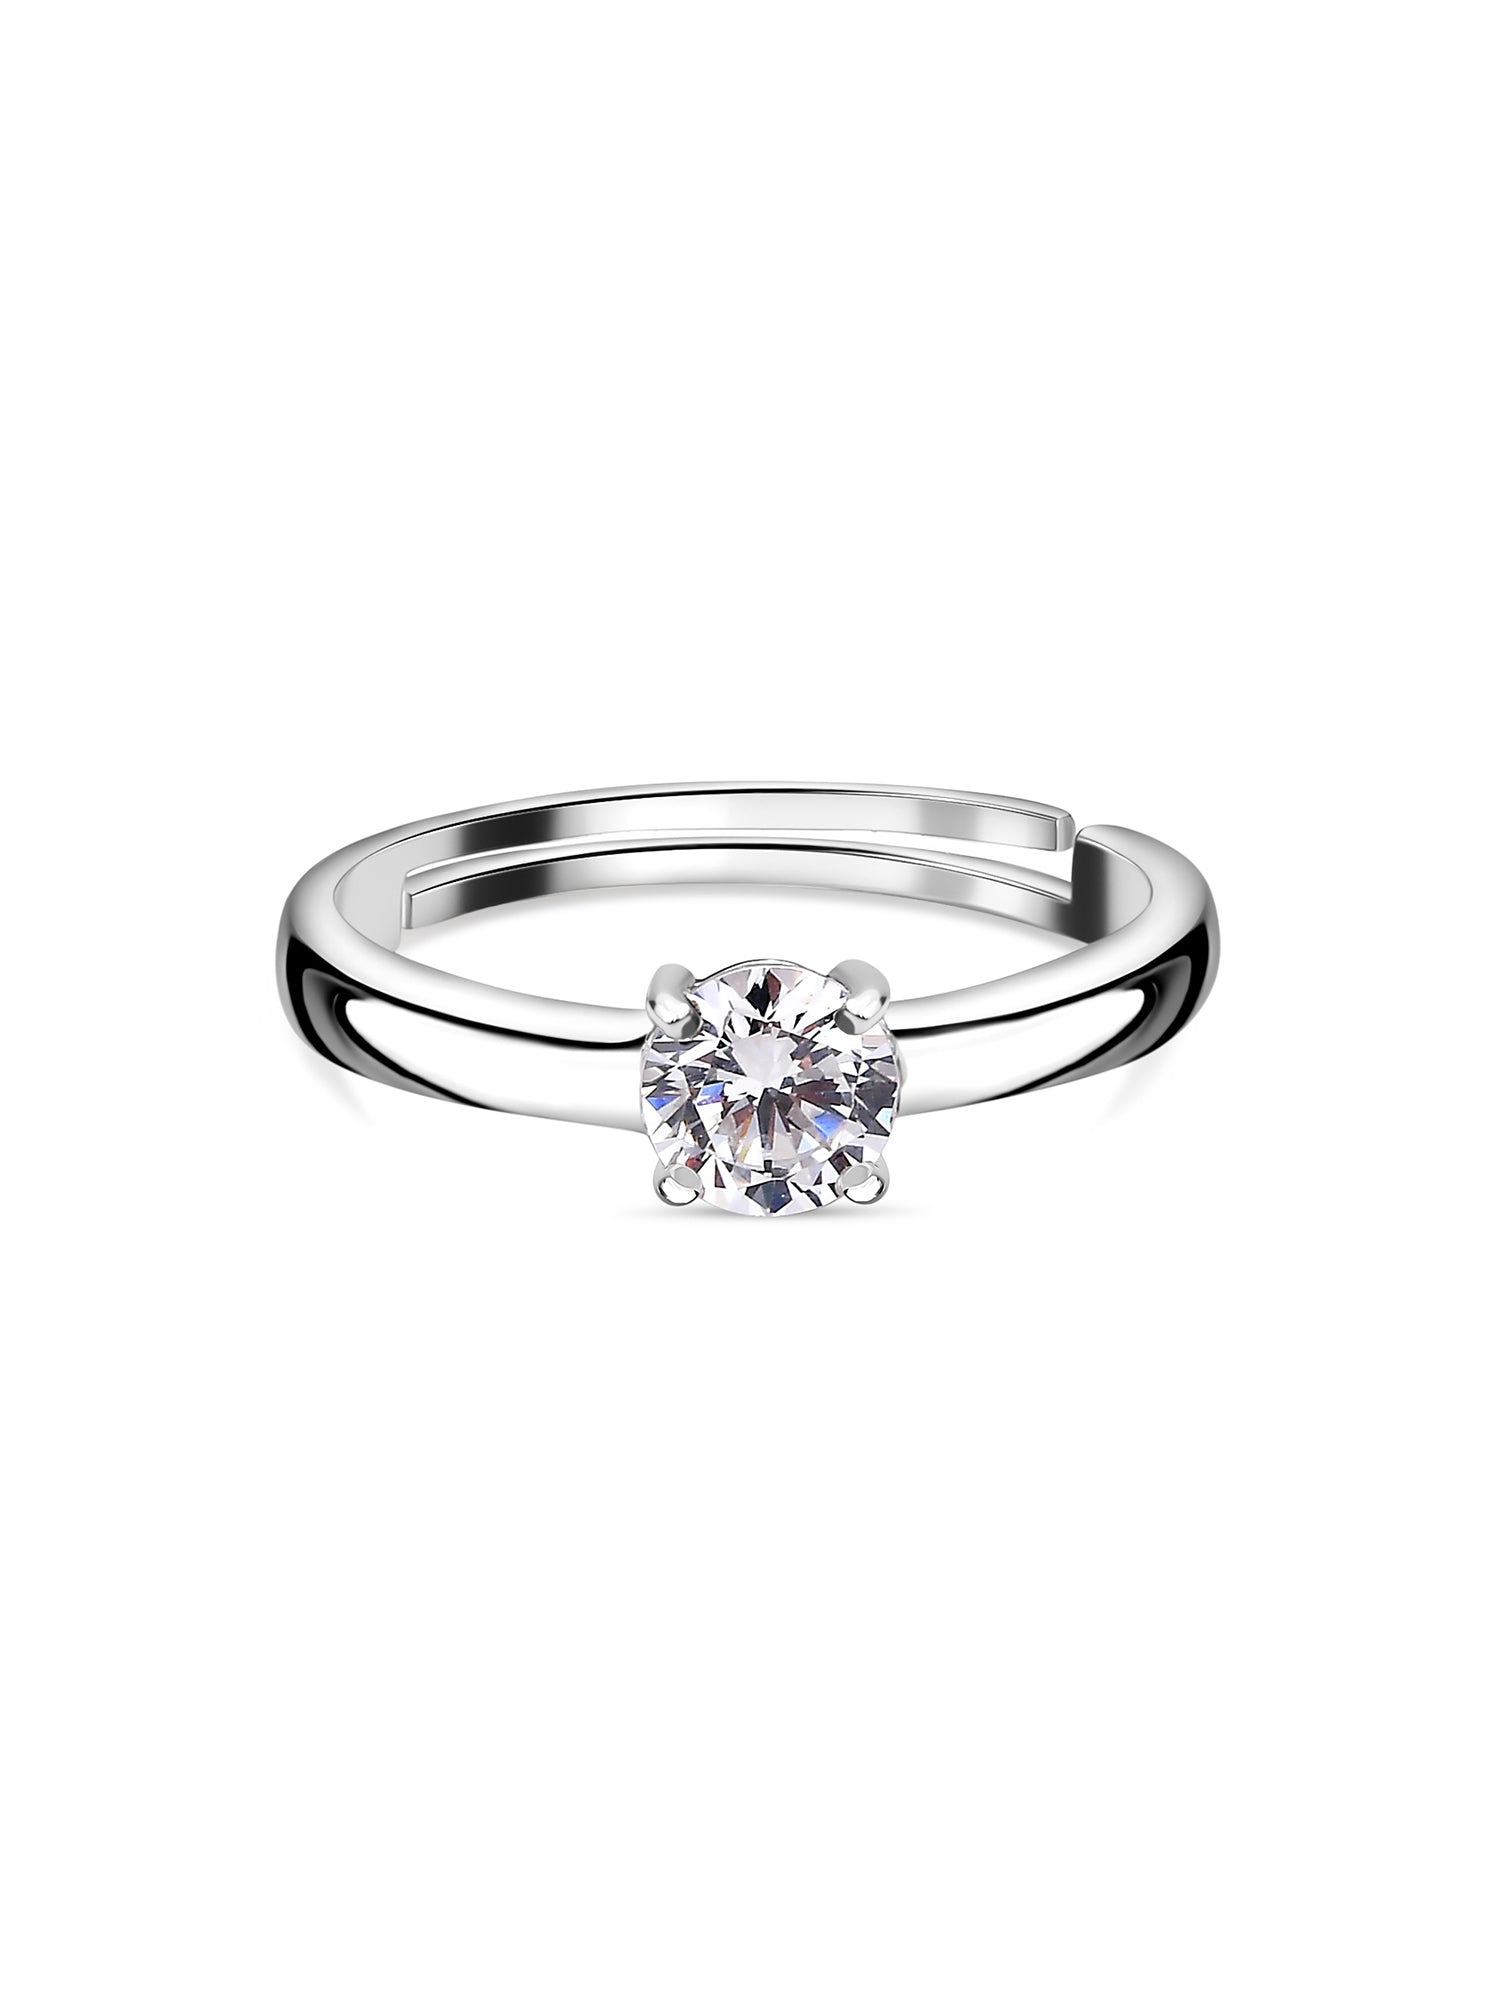 Ornate Jewels 0.8 Carat American Diamond Solitaire Adjustable Ring